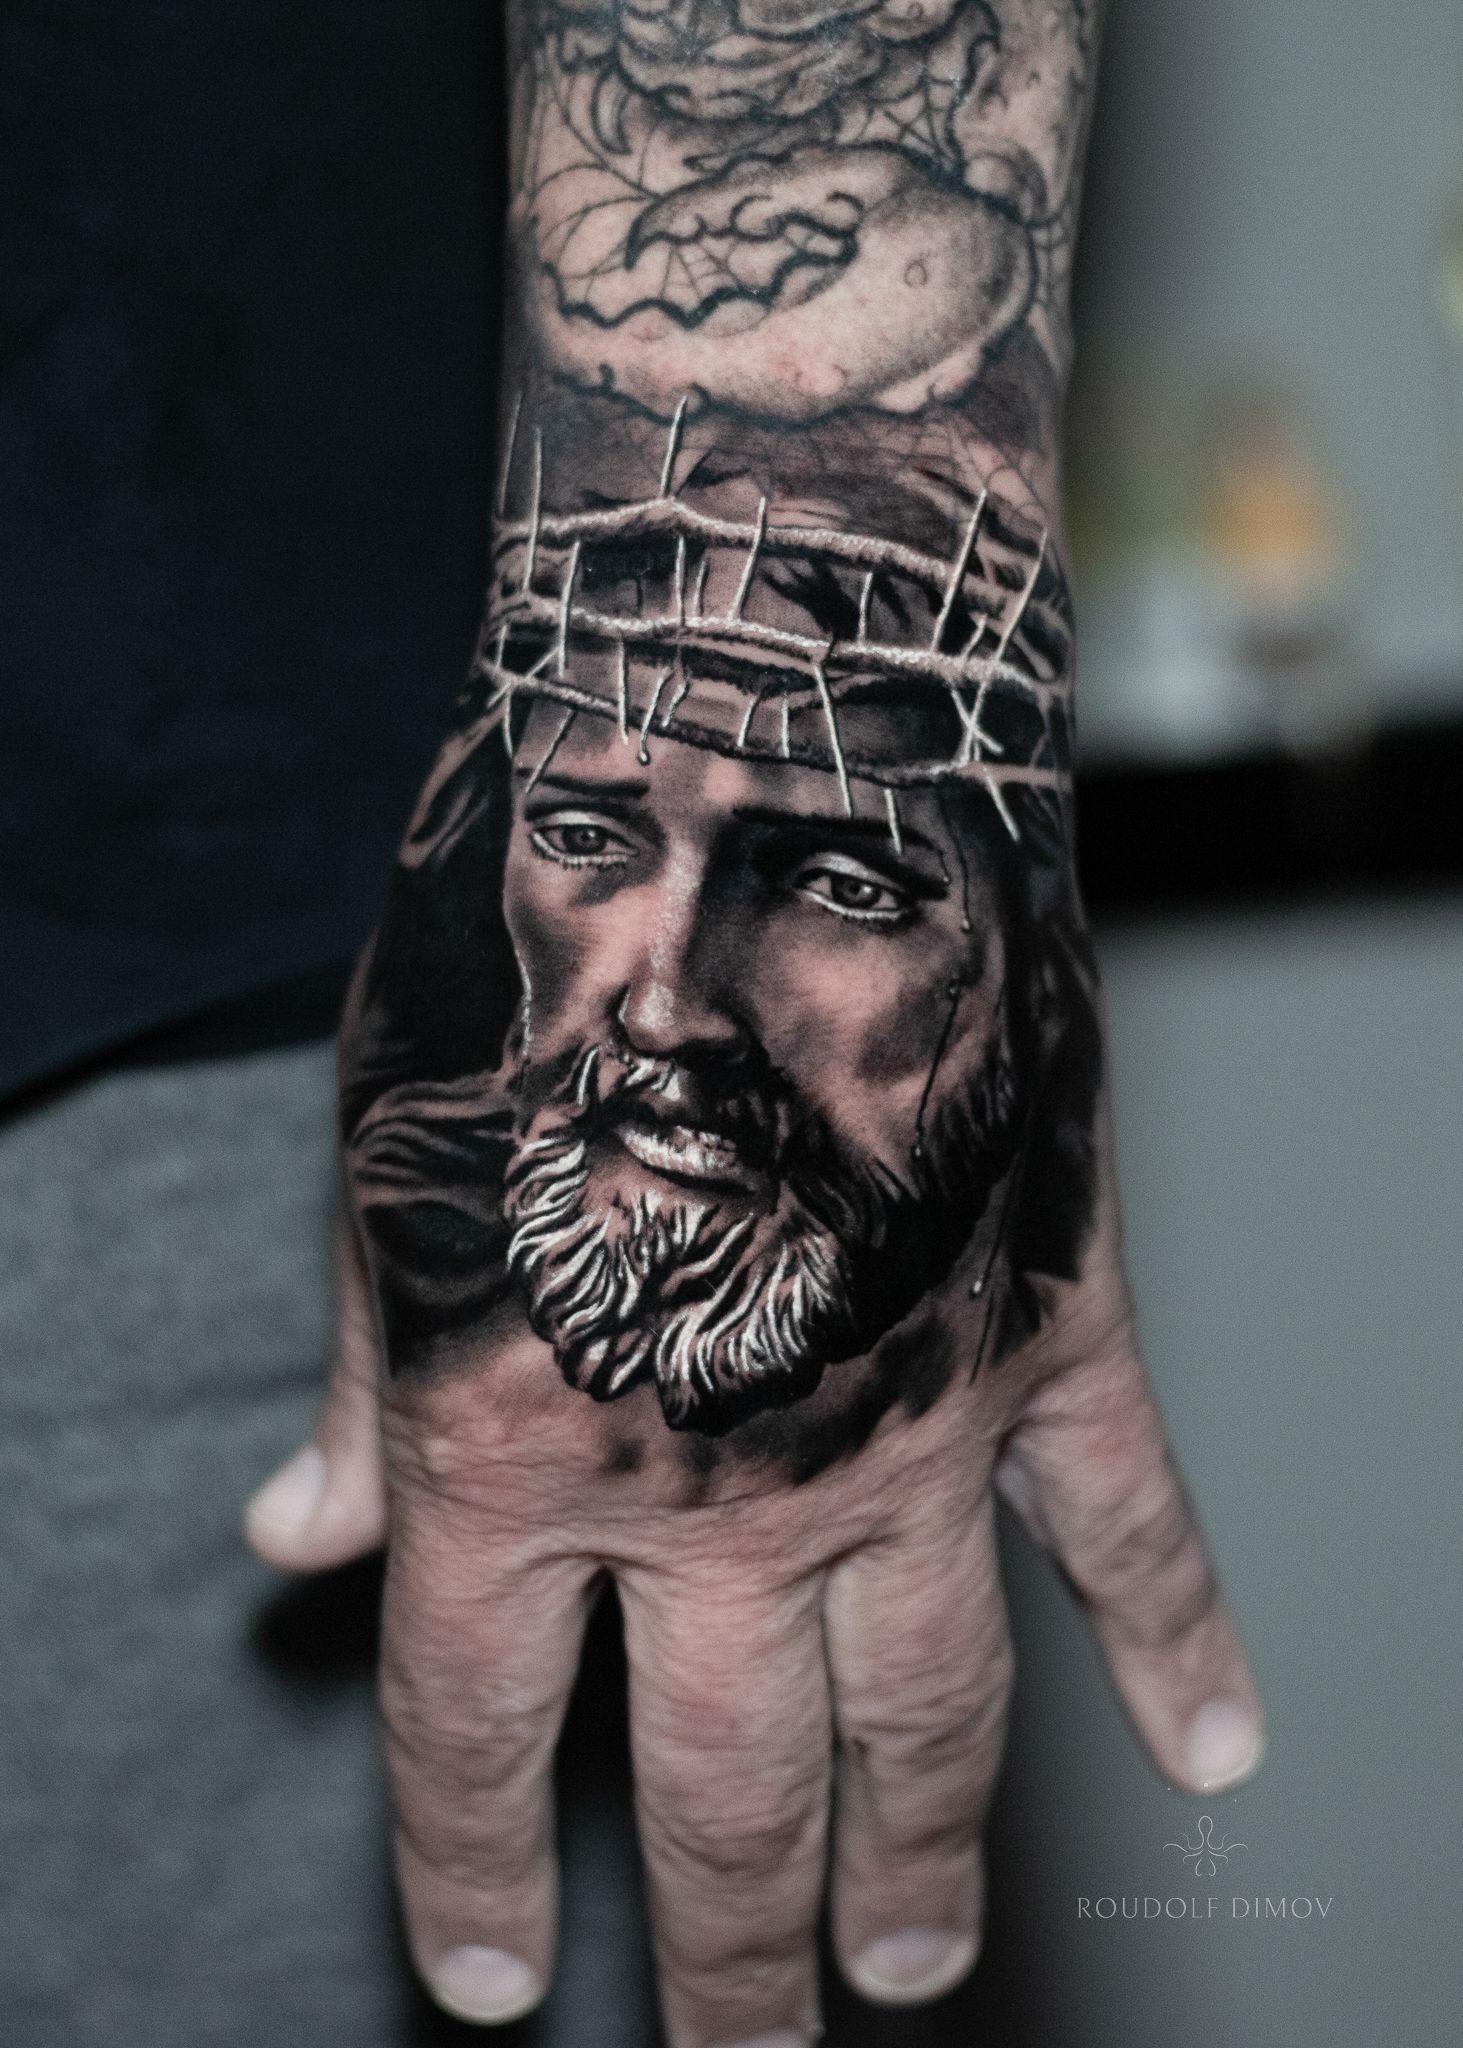 Jesus Tattoo by Chris Cockrill | Remington Tattoo Parlor